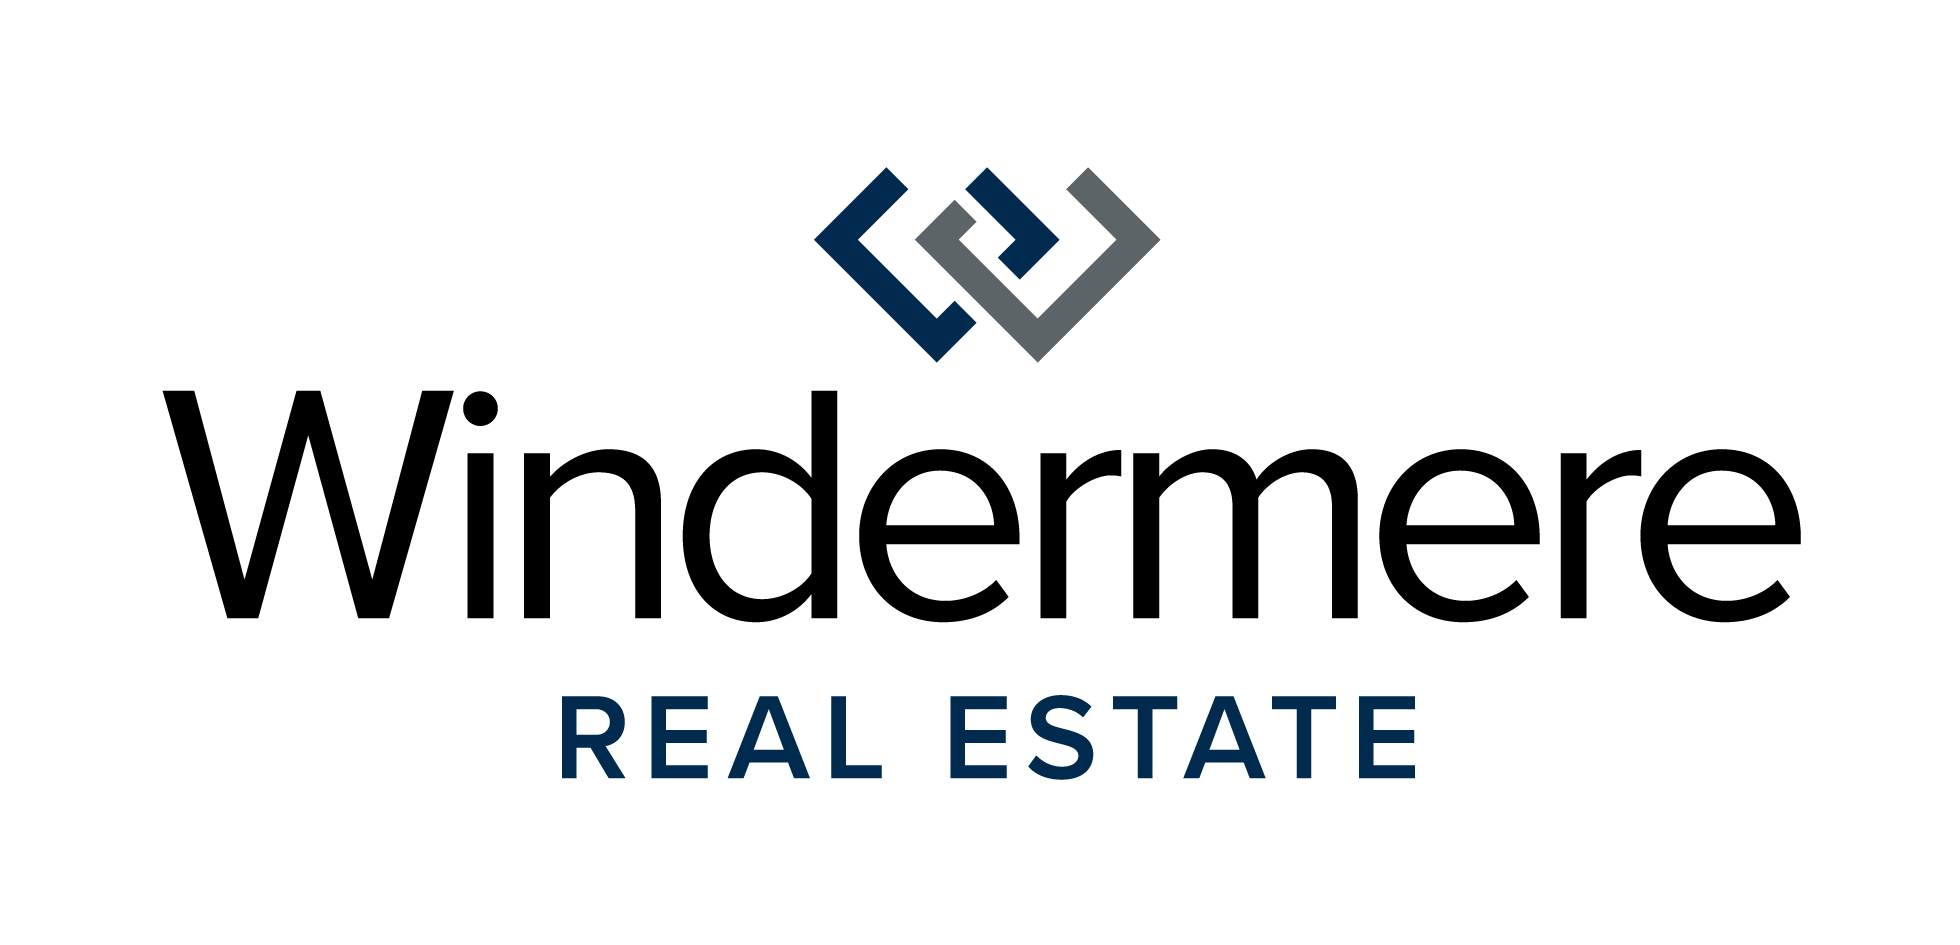 Windermere Real Estate: Homes for Sale